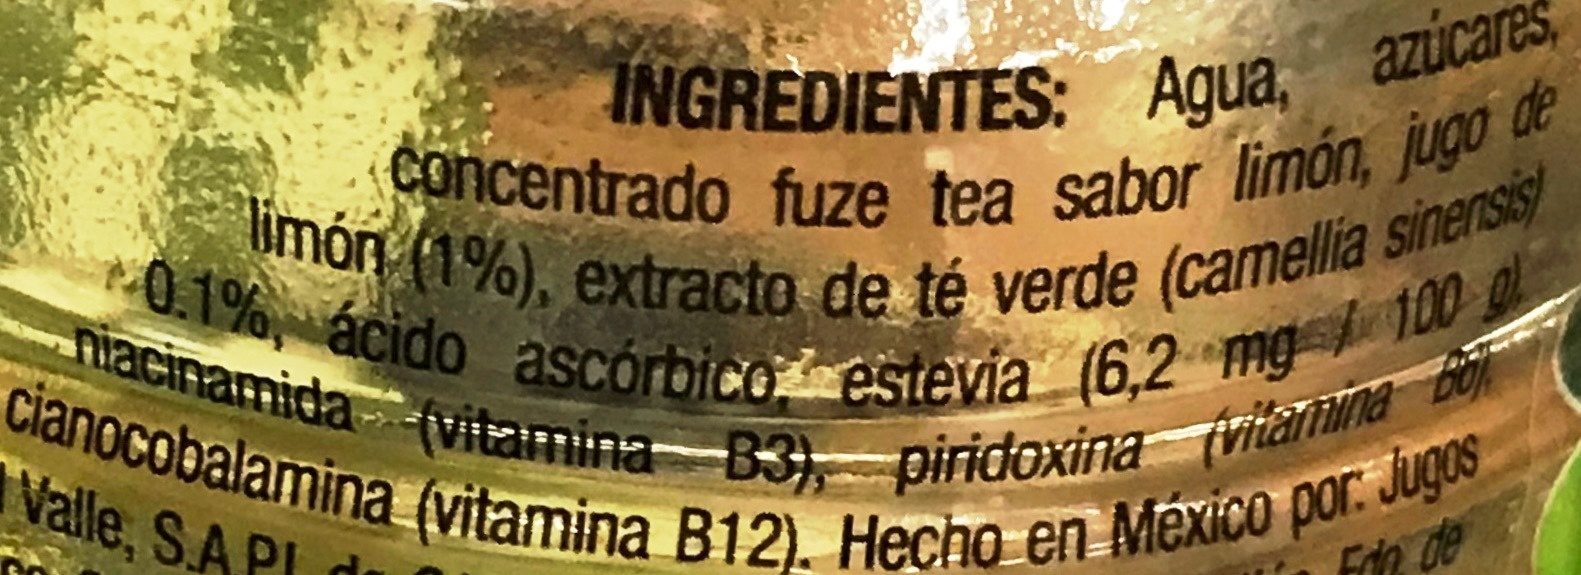 Fuze Tea Sabor Limón - Ingredientes